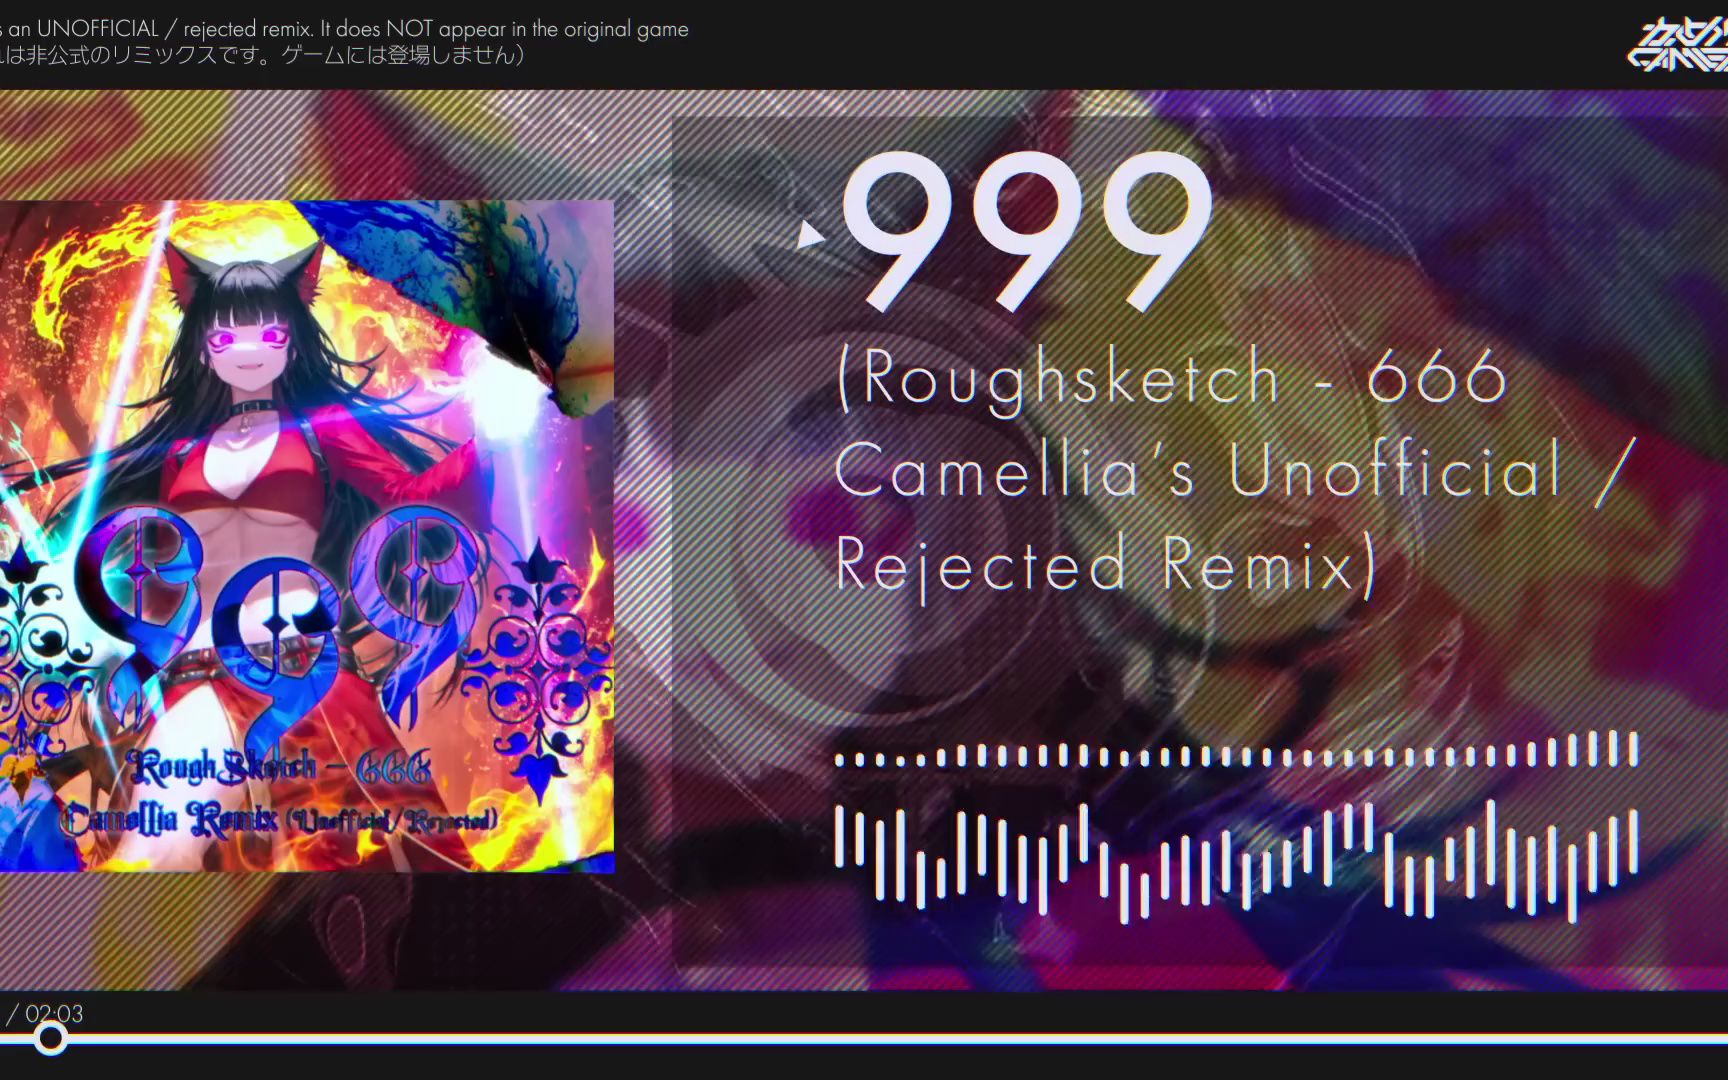 RoughSketch - 999 (